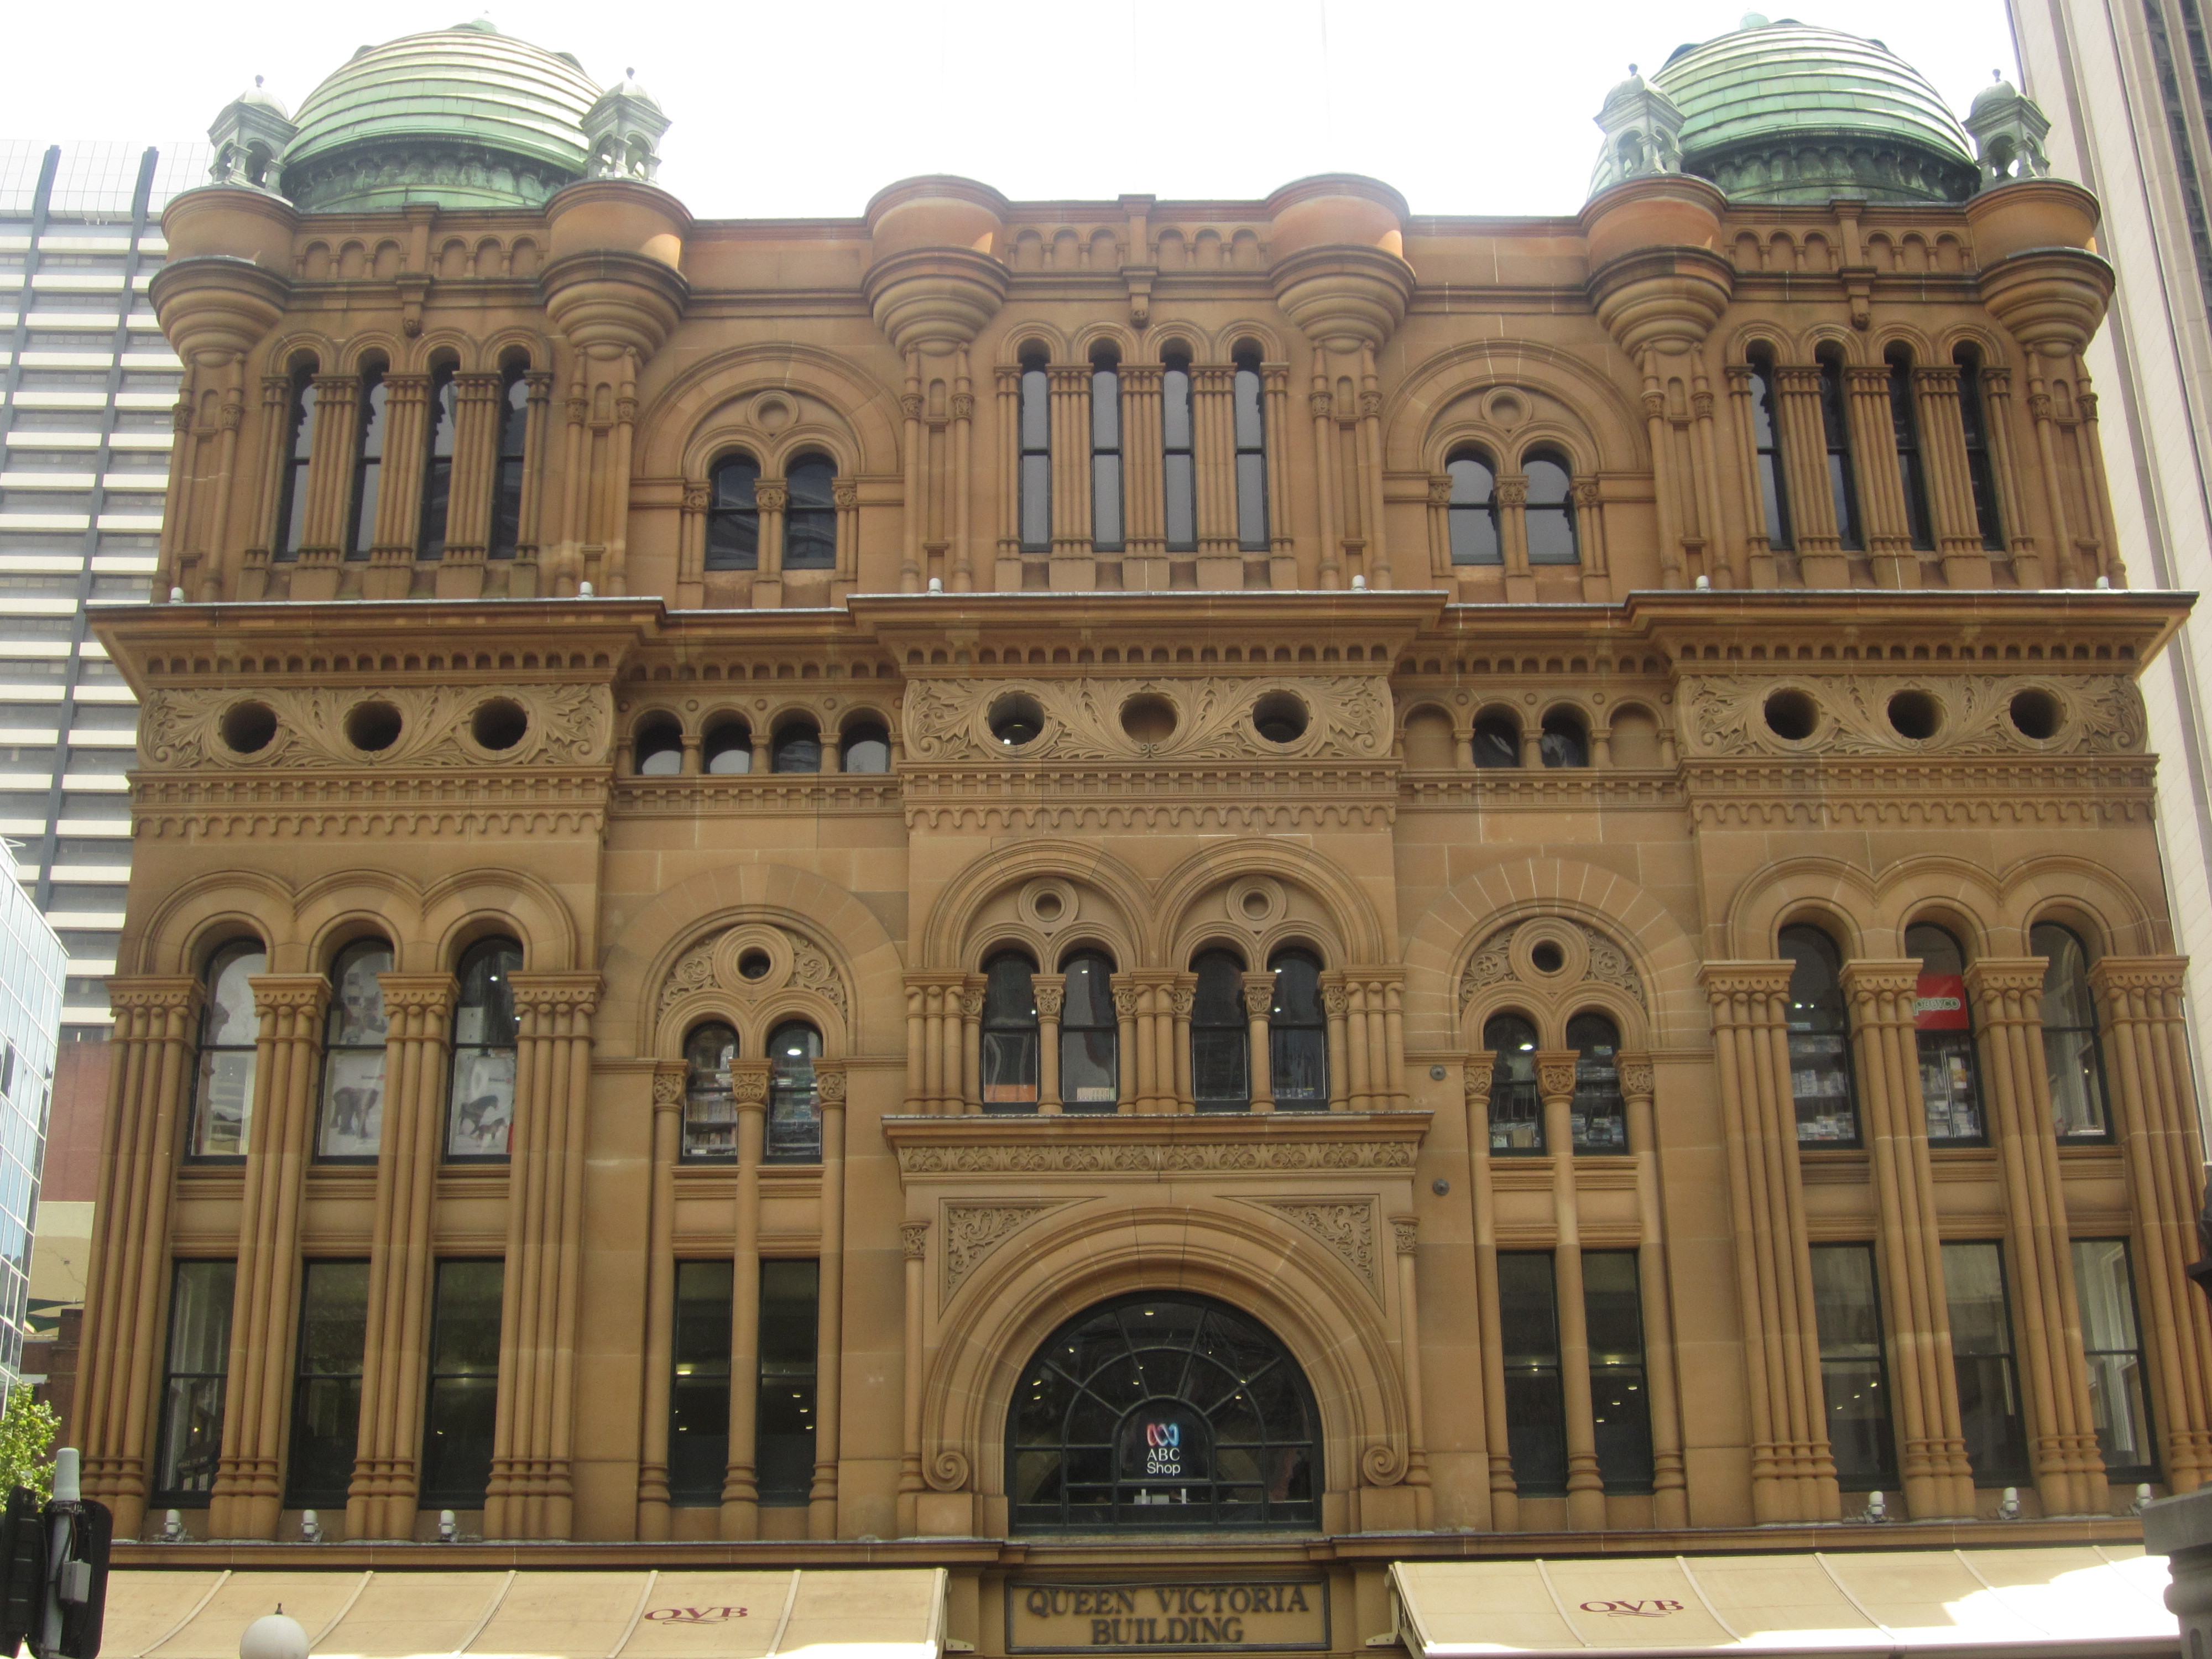 Queen Victoria Building Backgrounds on Wallpapers Vista